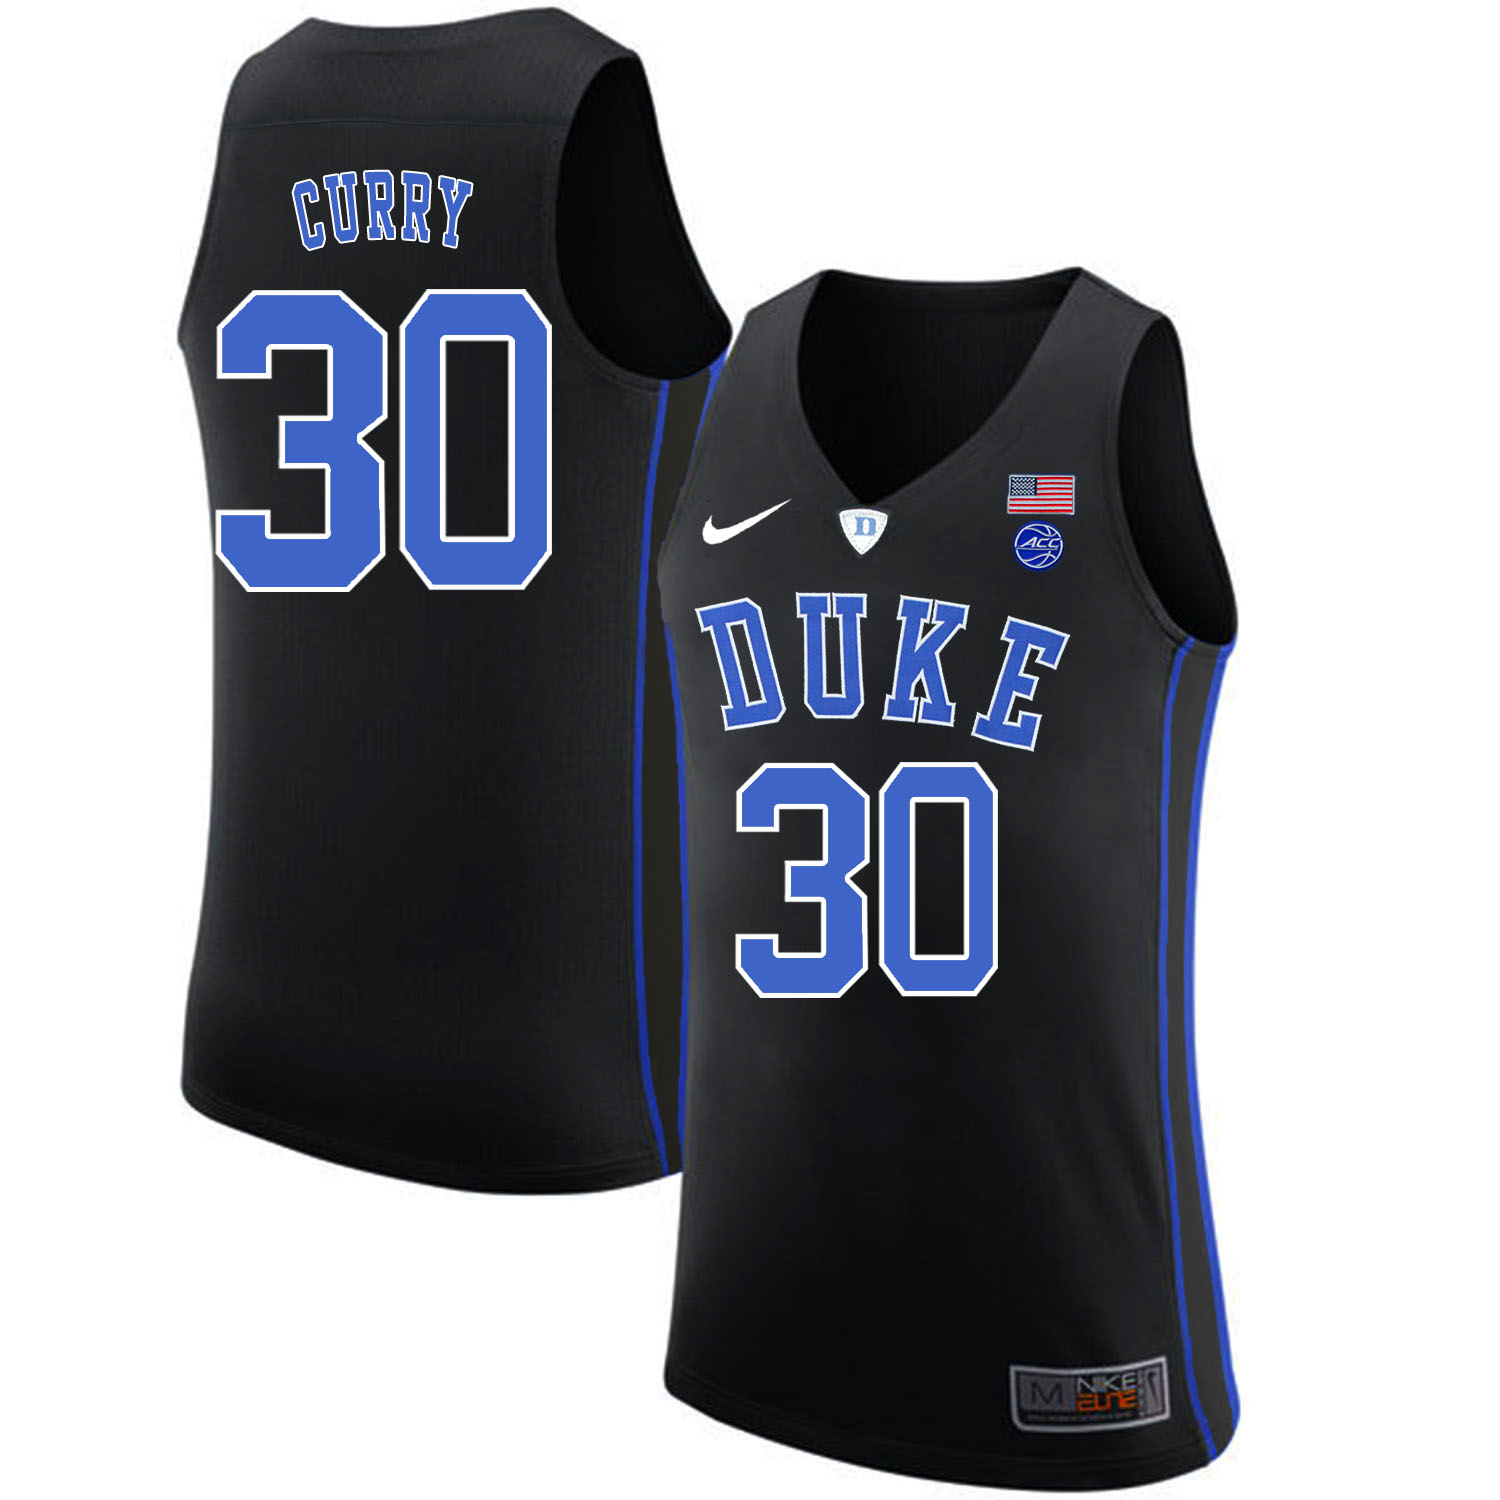 Duke Blue Devils 30 Seth Curry Black Nike College Basketball Jersey